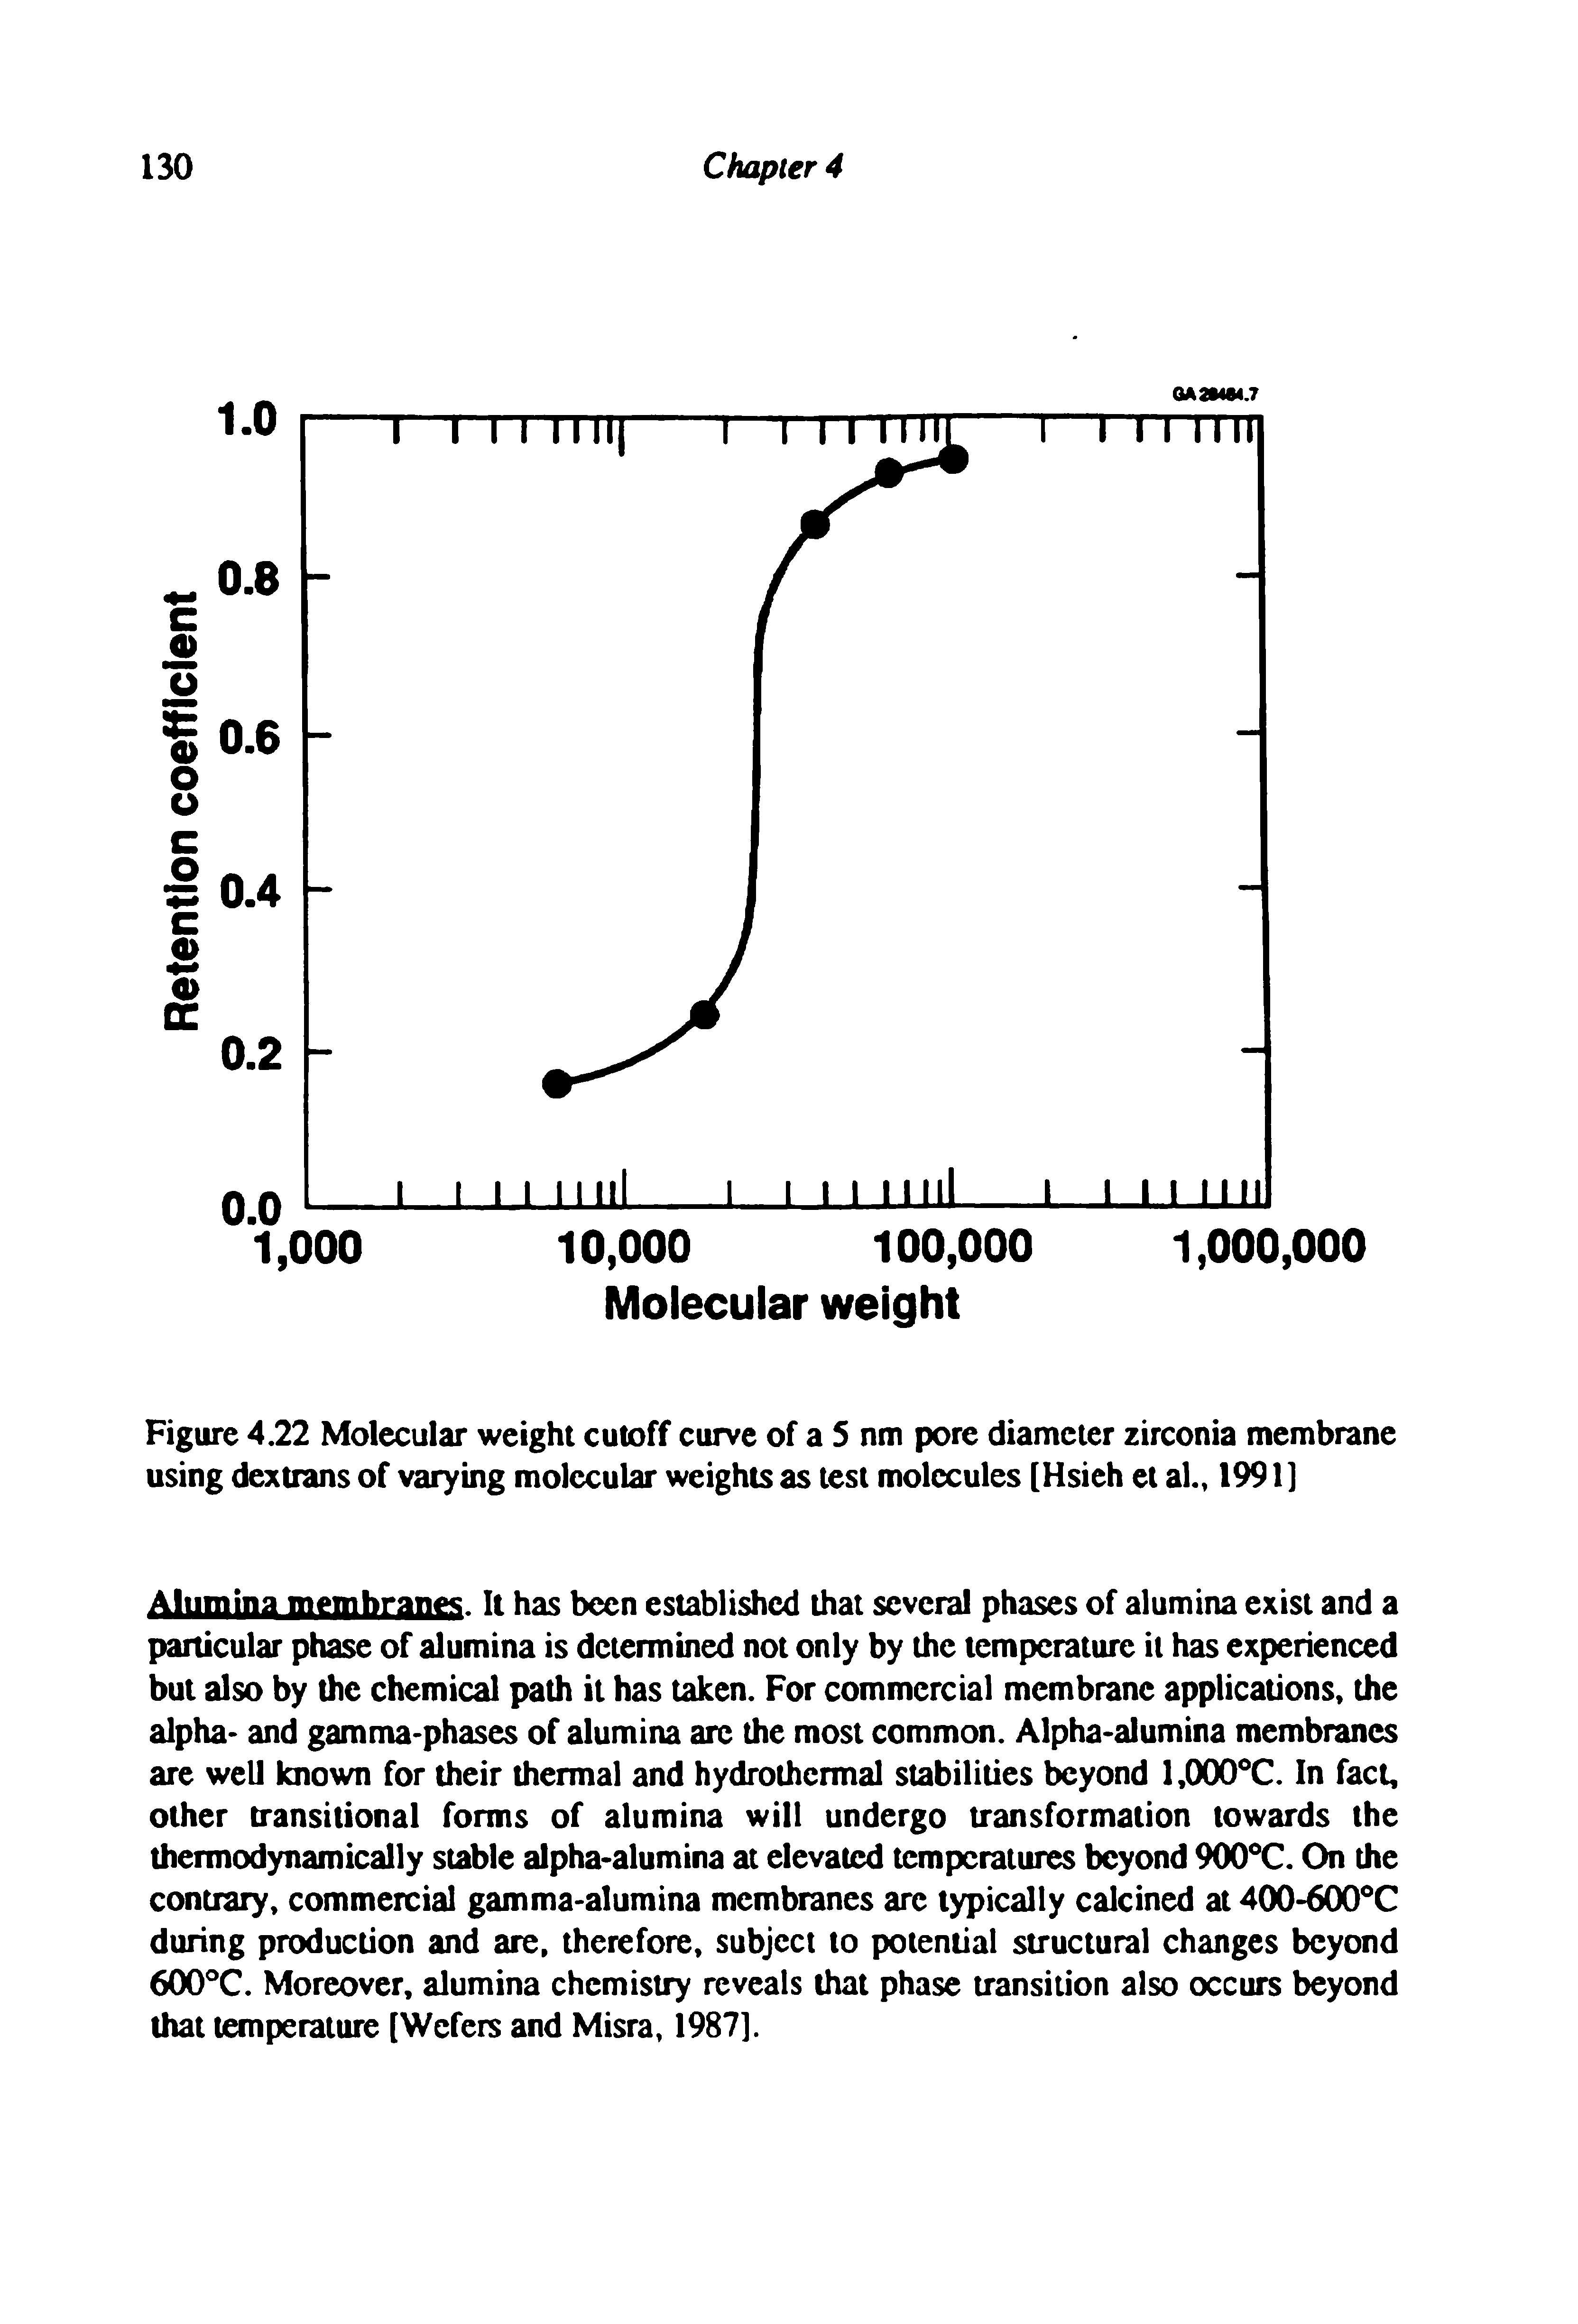 Figure 4.22 Molecular weight cutoff curve of a 5 nm pore diameter zirconia membrane using dextians of varying molecular weights as test molecules [Hsieh et al, 1991]...